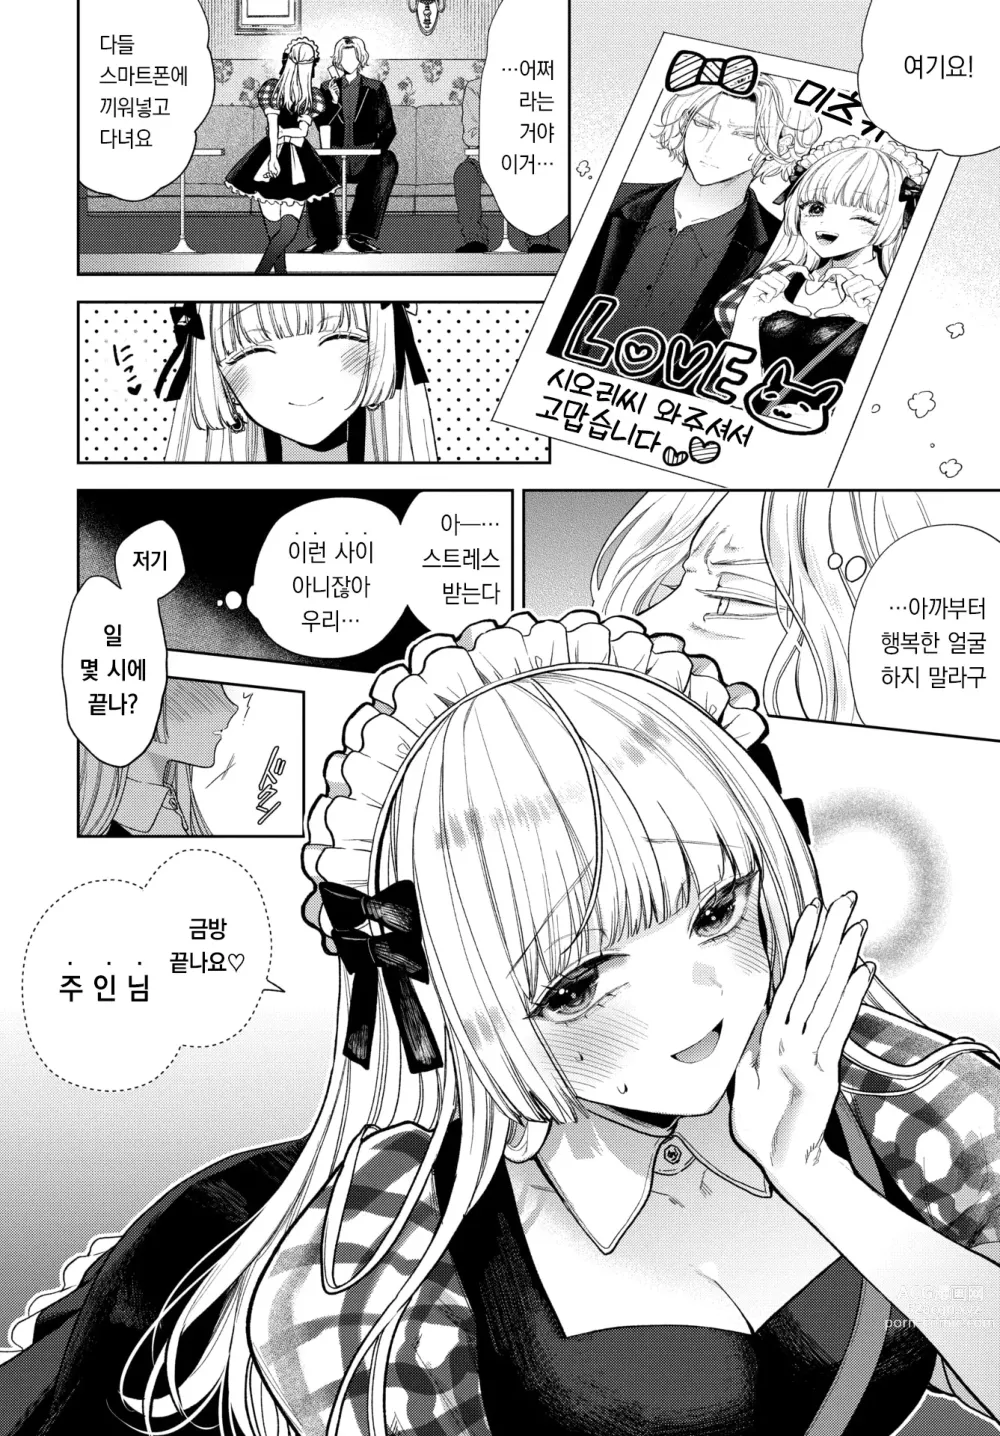 Page 7 of manga 남자는 순결을 만난다 ~중편~